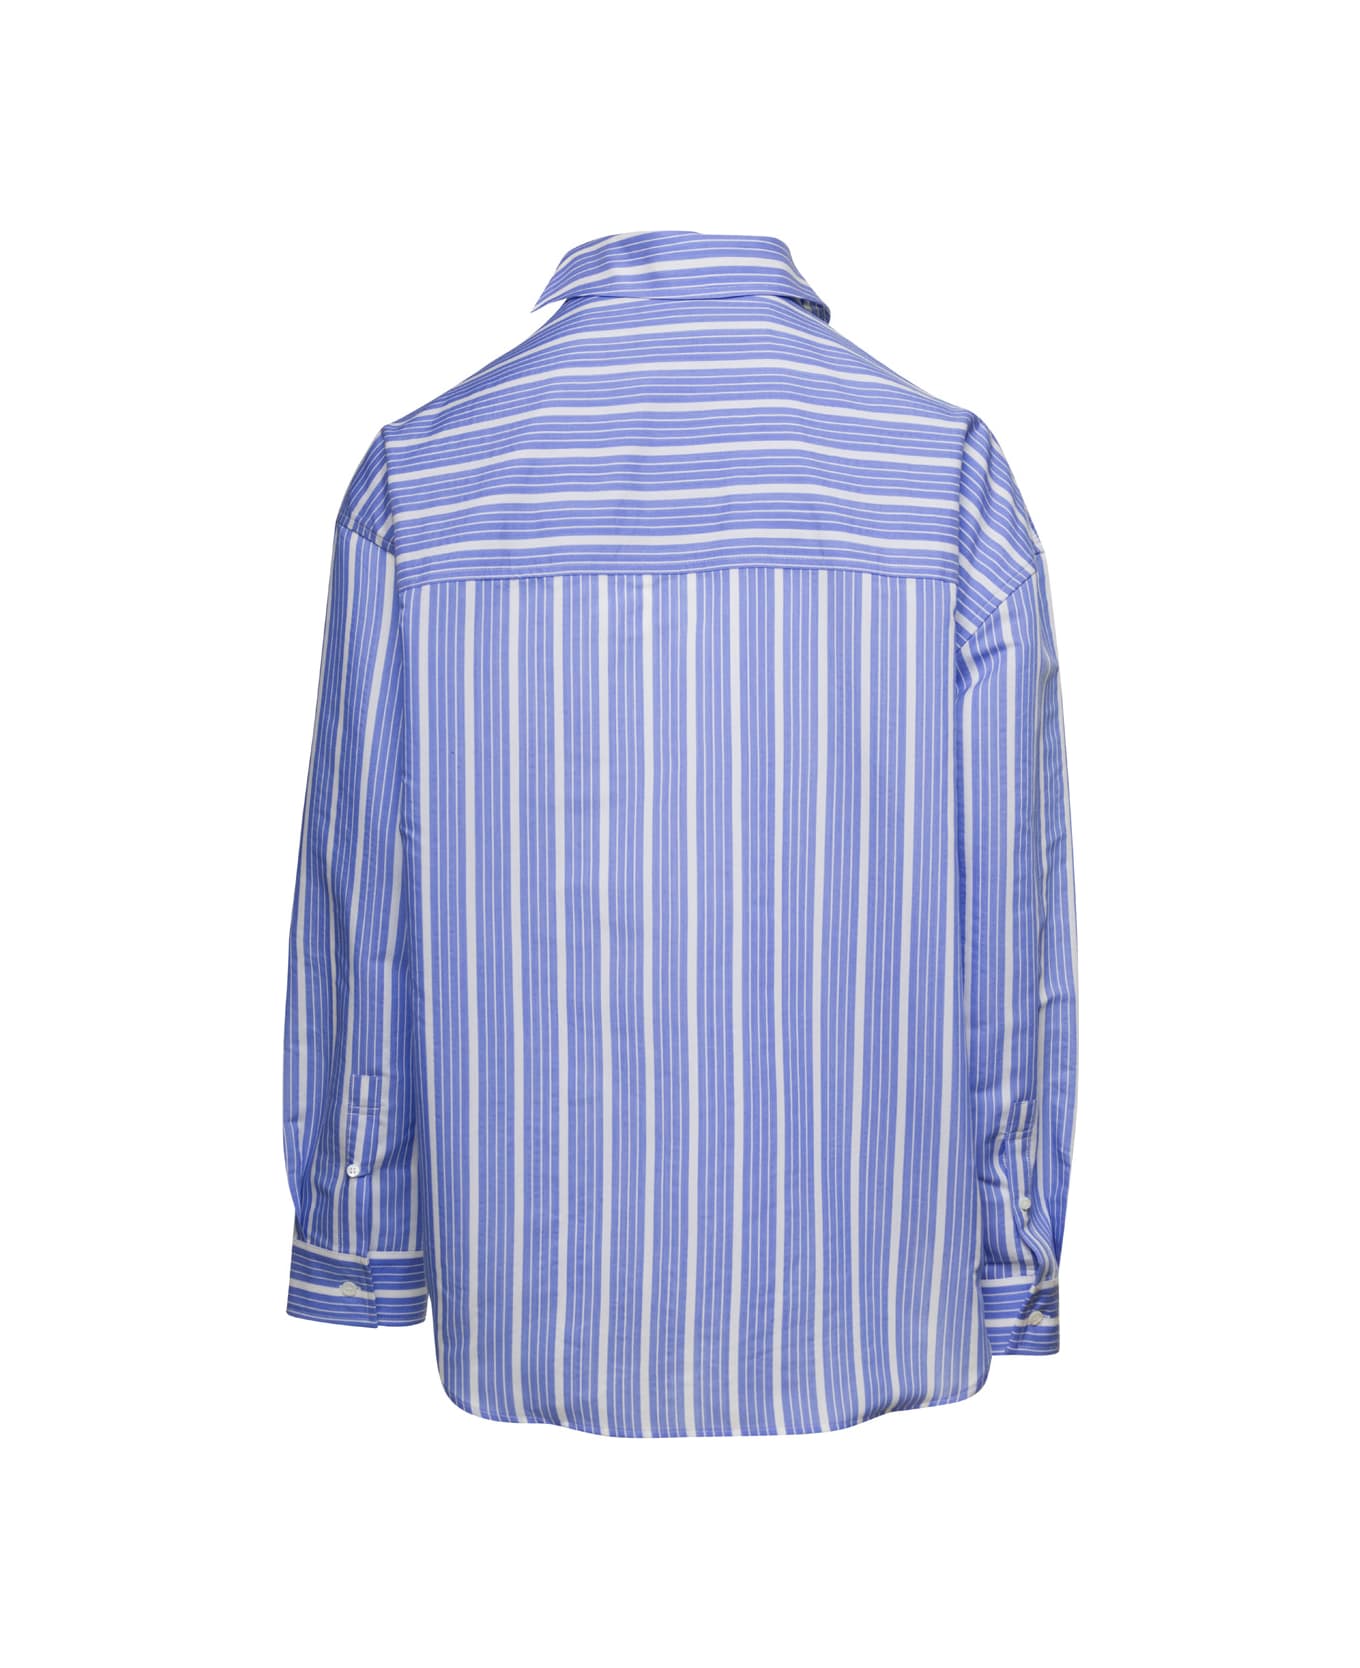 Jacquemus Cuadro Striped Silk-blend Shirt - Jcqud bus. lg stp blue/wh シャツ